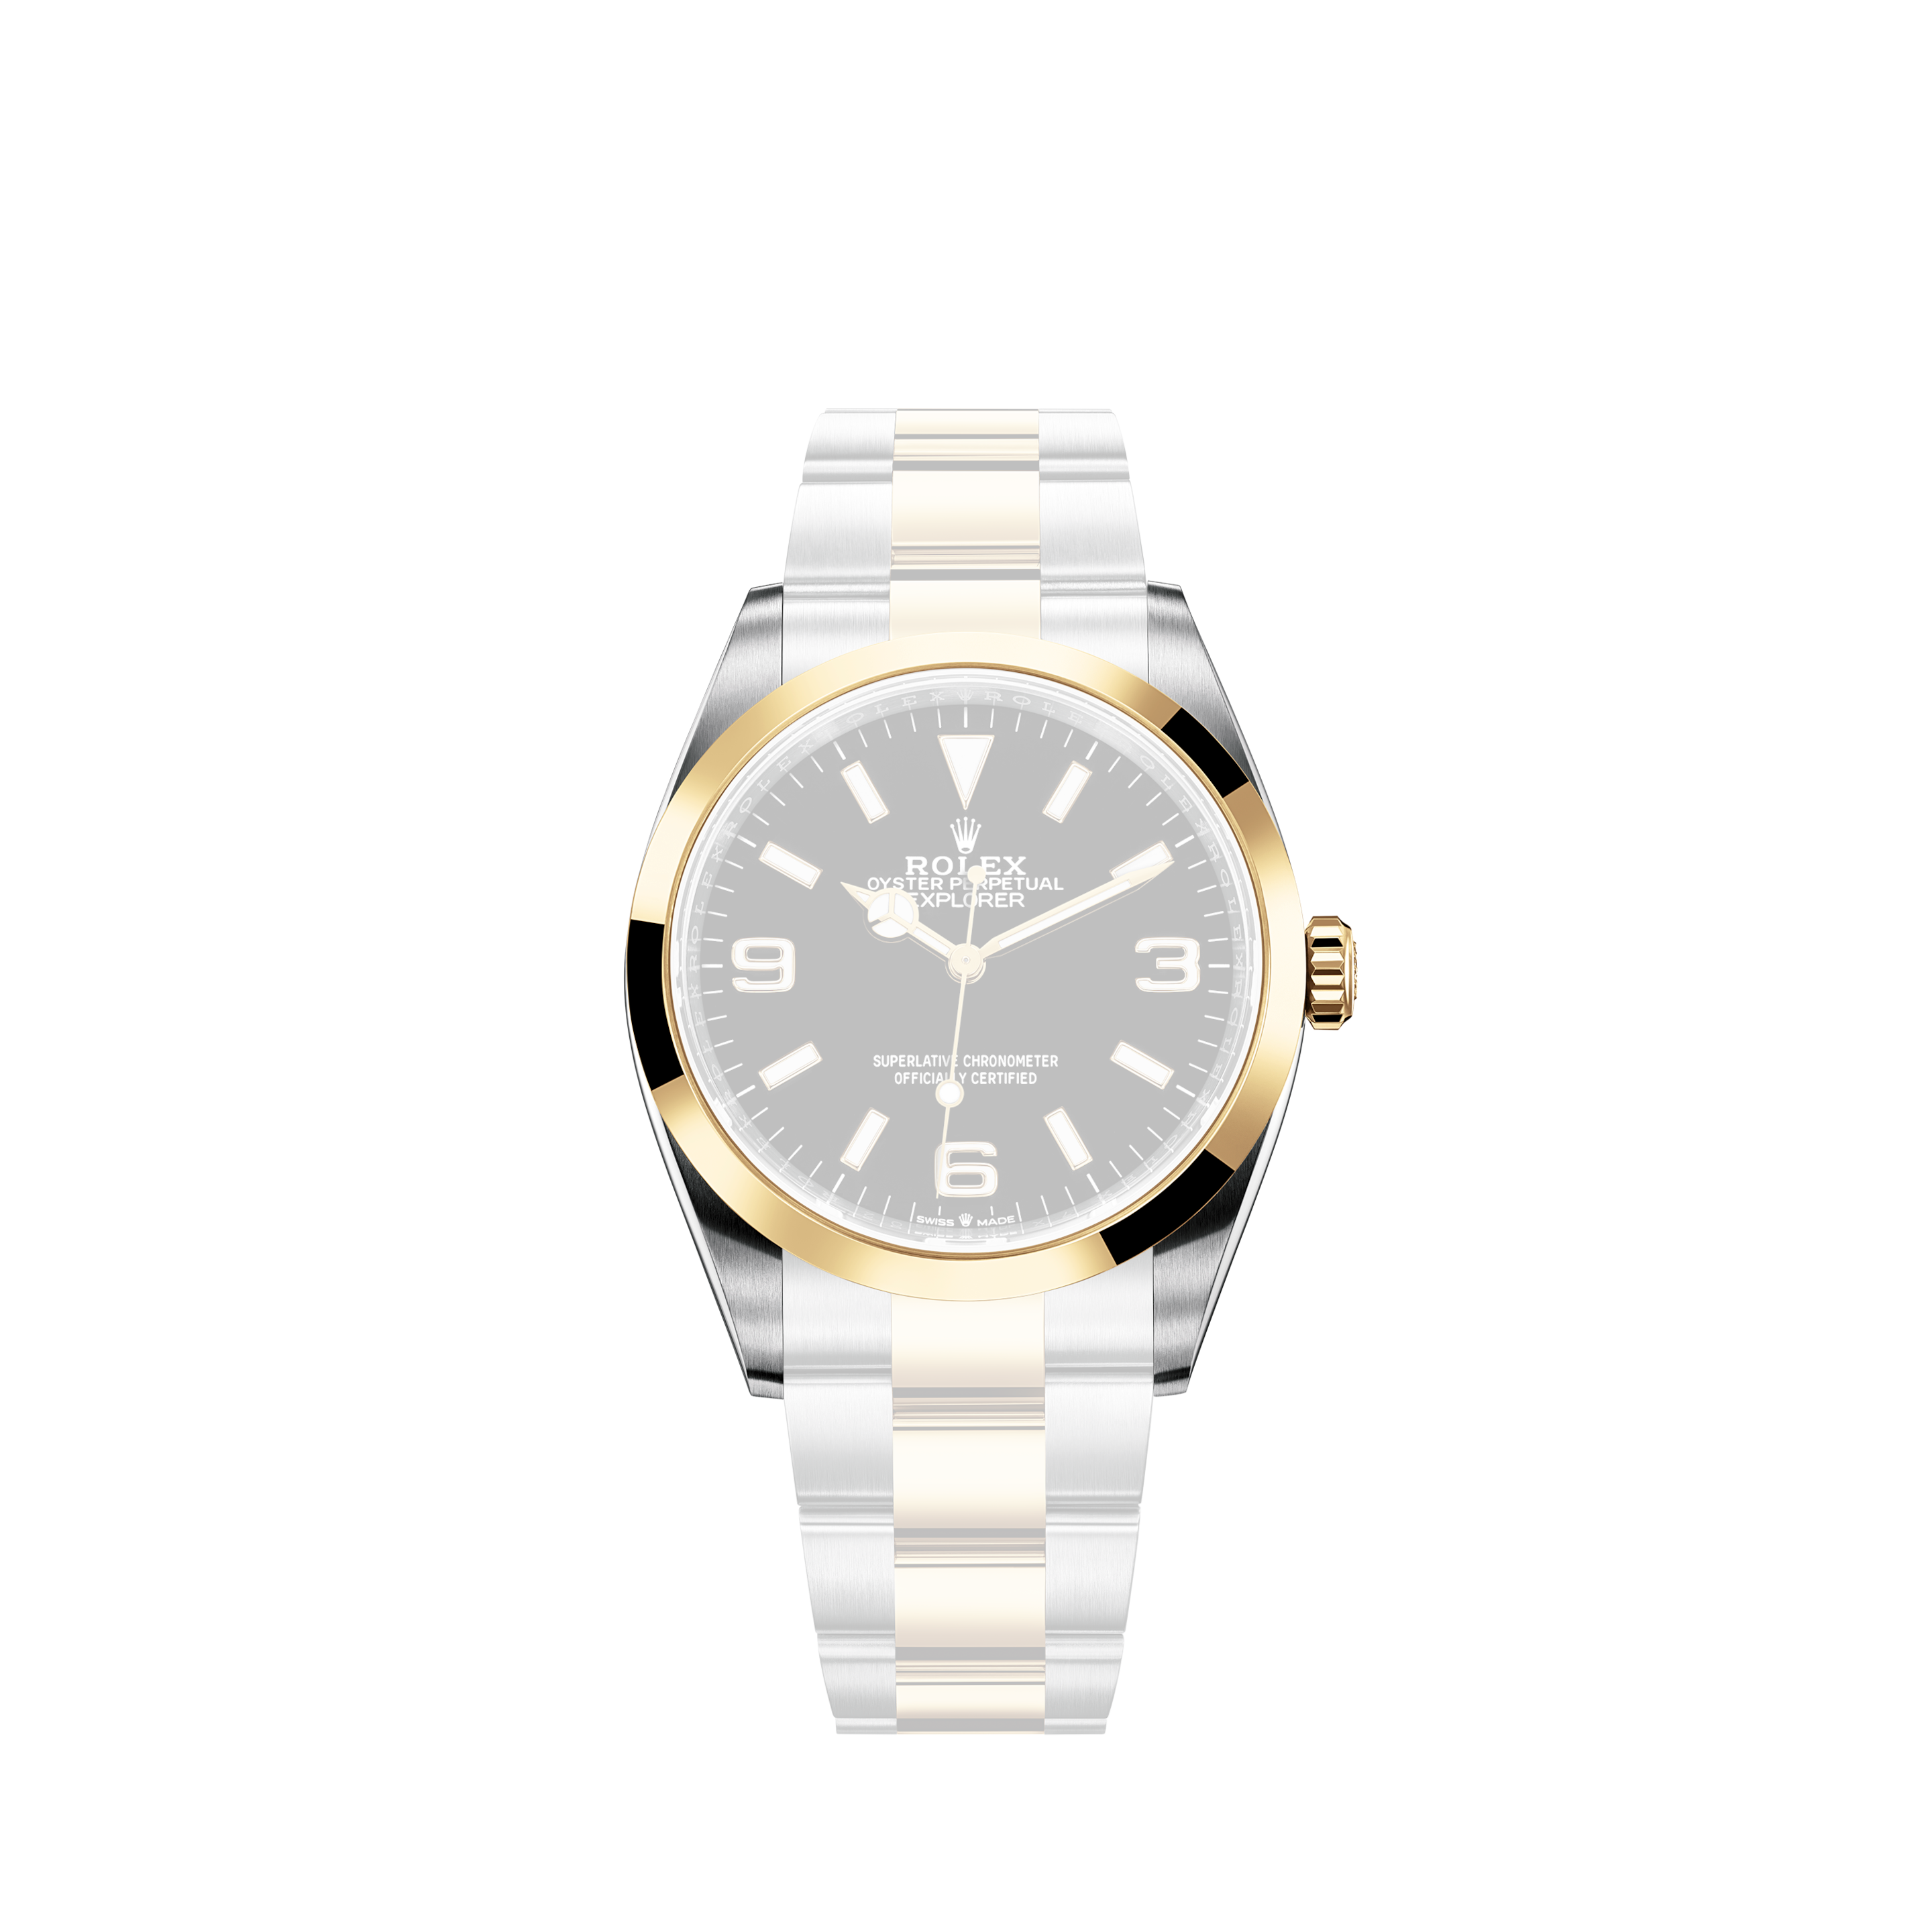 Rolex Oyster Perpetual Date Gilt dial, 1966Rolex Sky-Dweller 326934 Black Dial